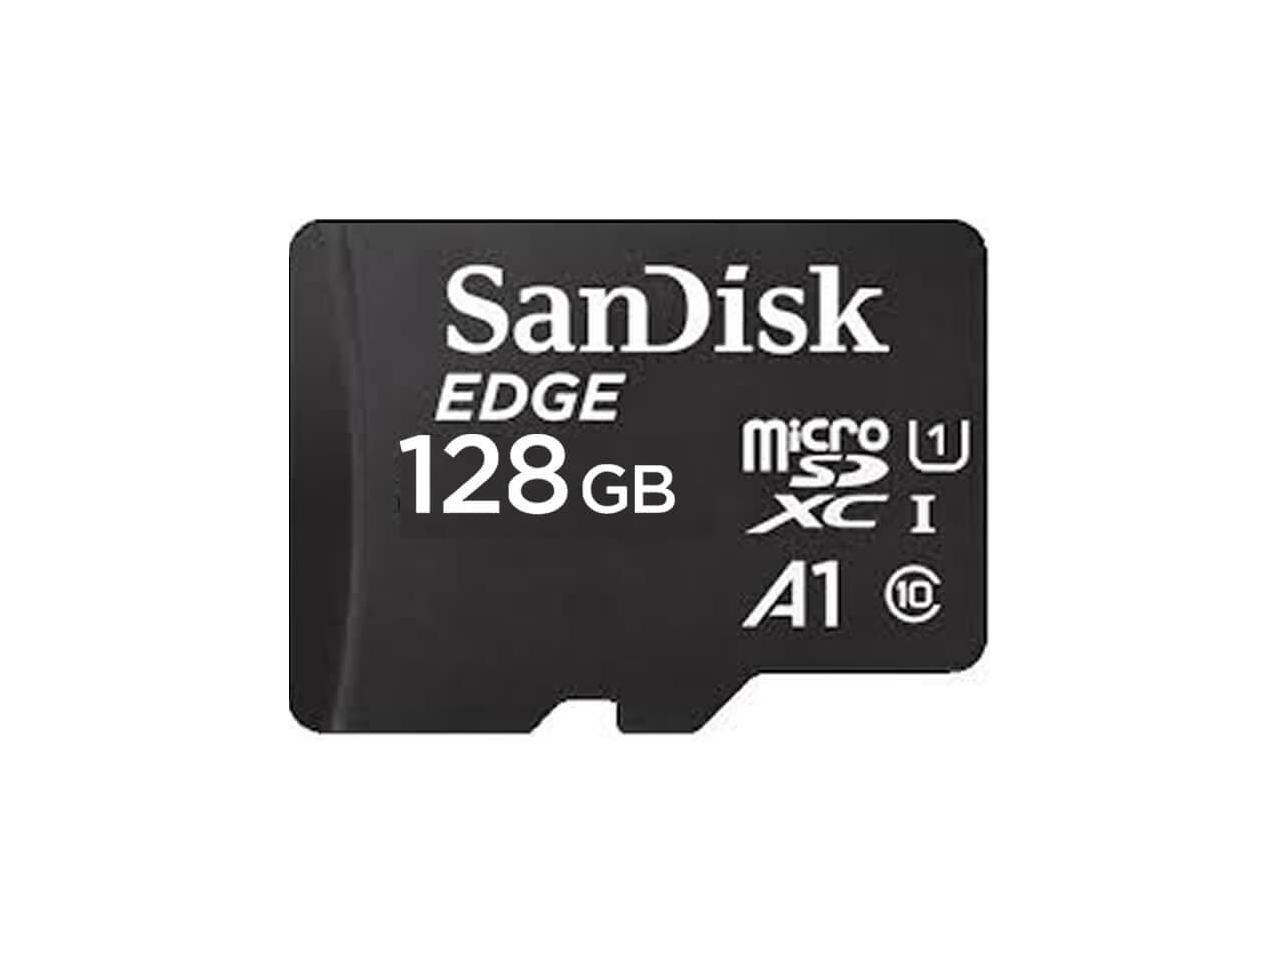 SanDisk EDGE 128GB Industrial microSDXC Card SDSDQAD-128G UHS-I U1 A1 High Endurance (non-retail package)